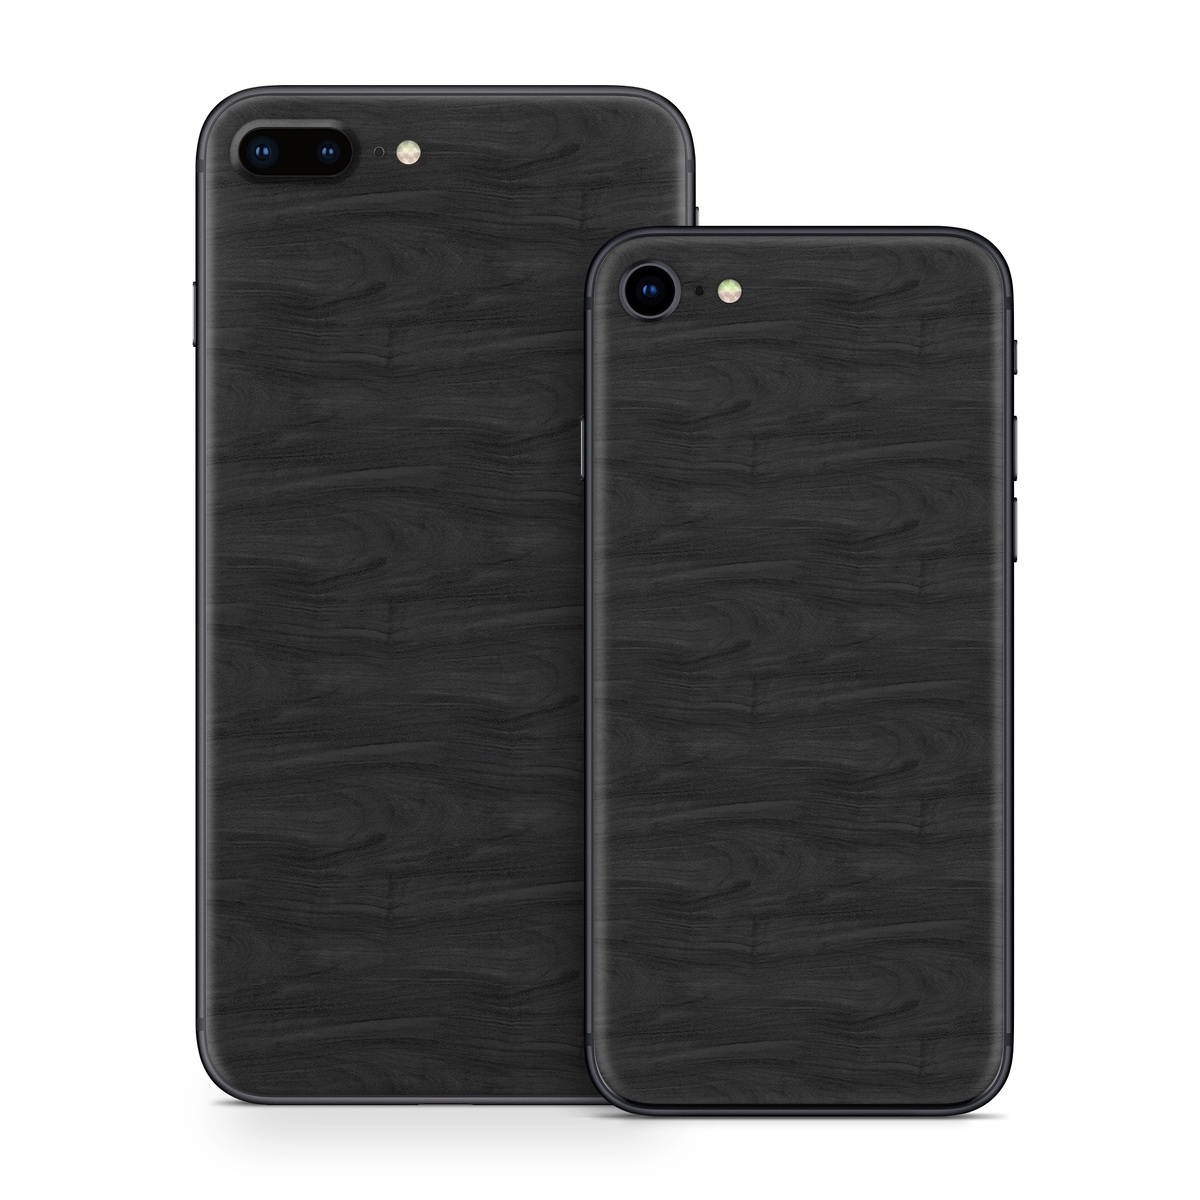 iPhone 8 Skin design of Black, Brown, Wood, Grey, Flooring, Floor, Laminate flooring, Wood flooring, with black colors